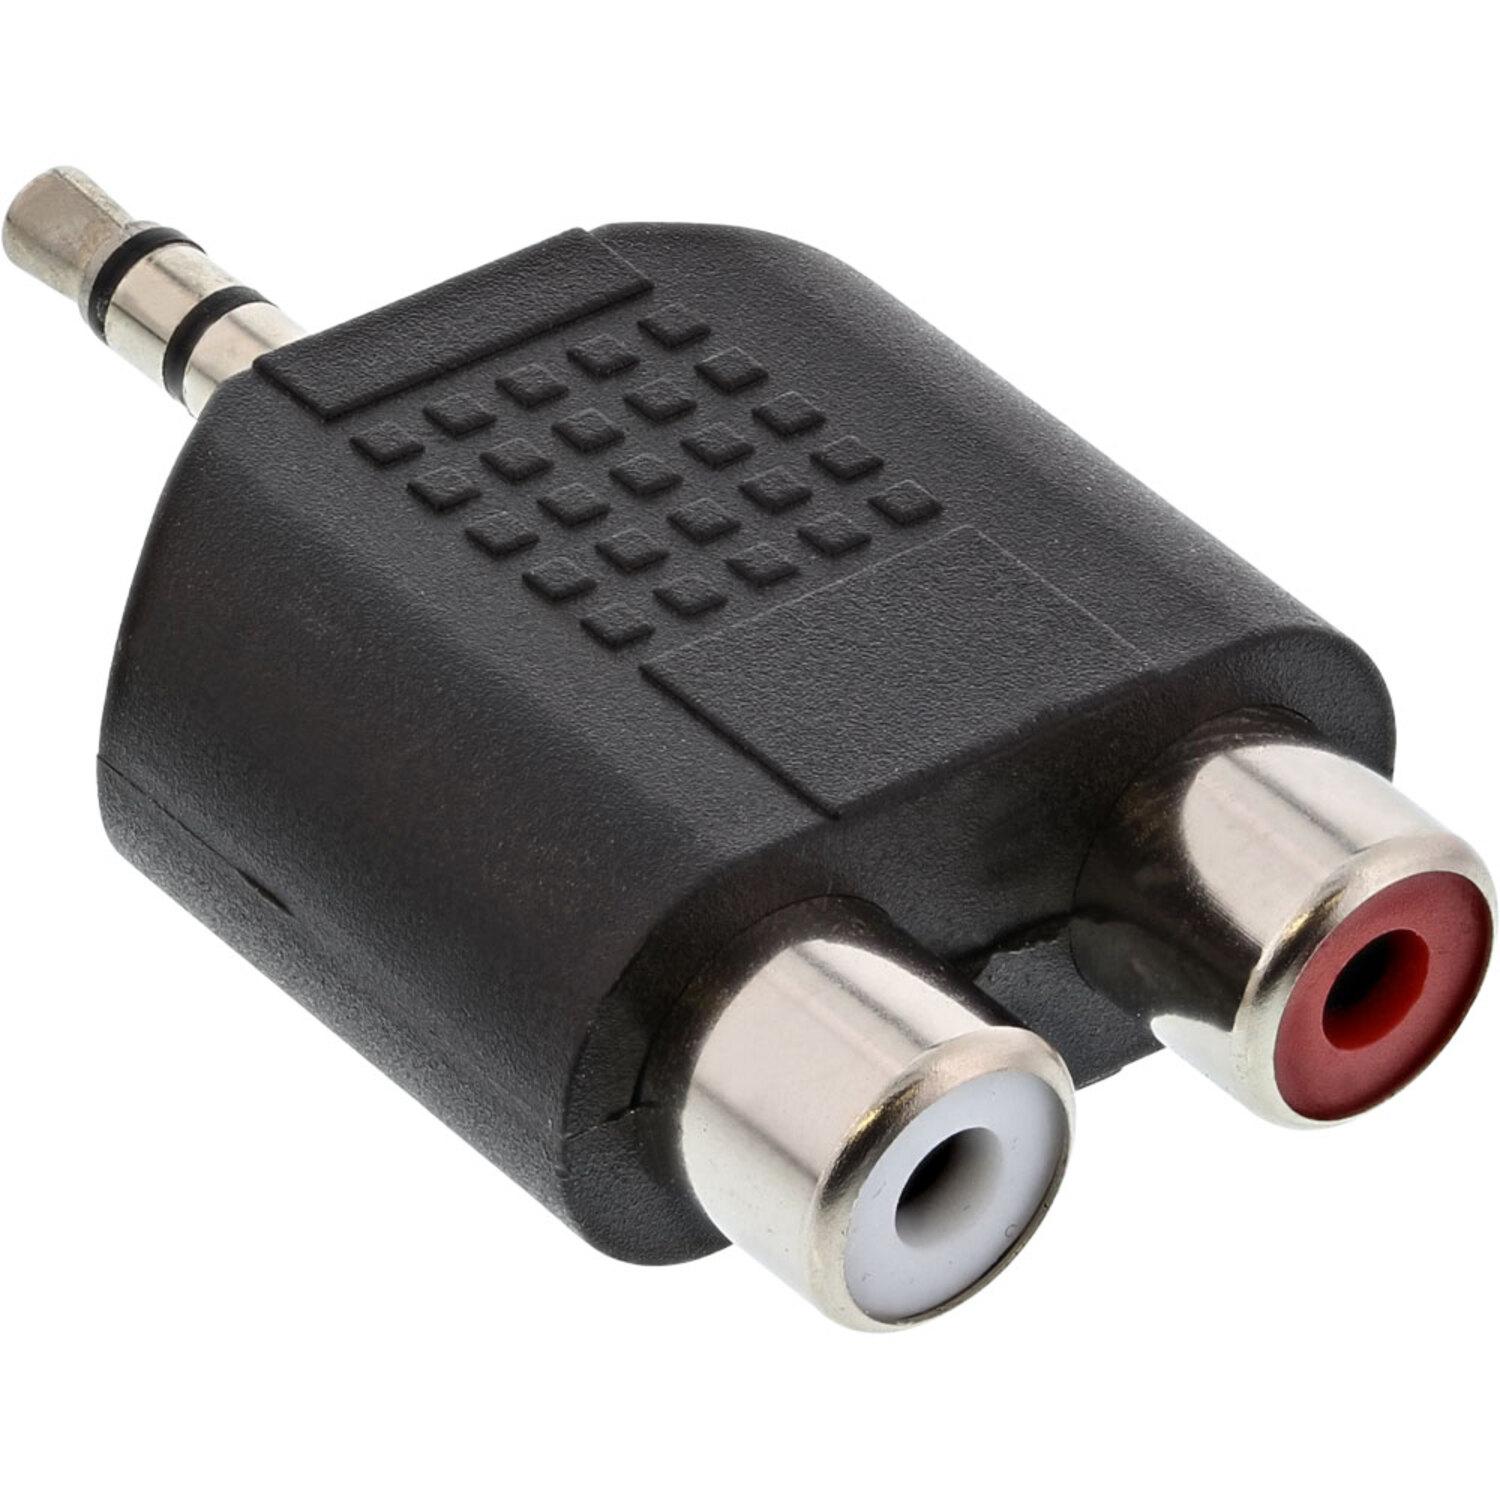 INLINE InLine® / Cinch Cinch Klinke Audio zu 3,5mm an Buchse, Adapter, Stecker 2x zu Klinke